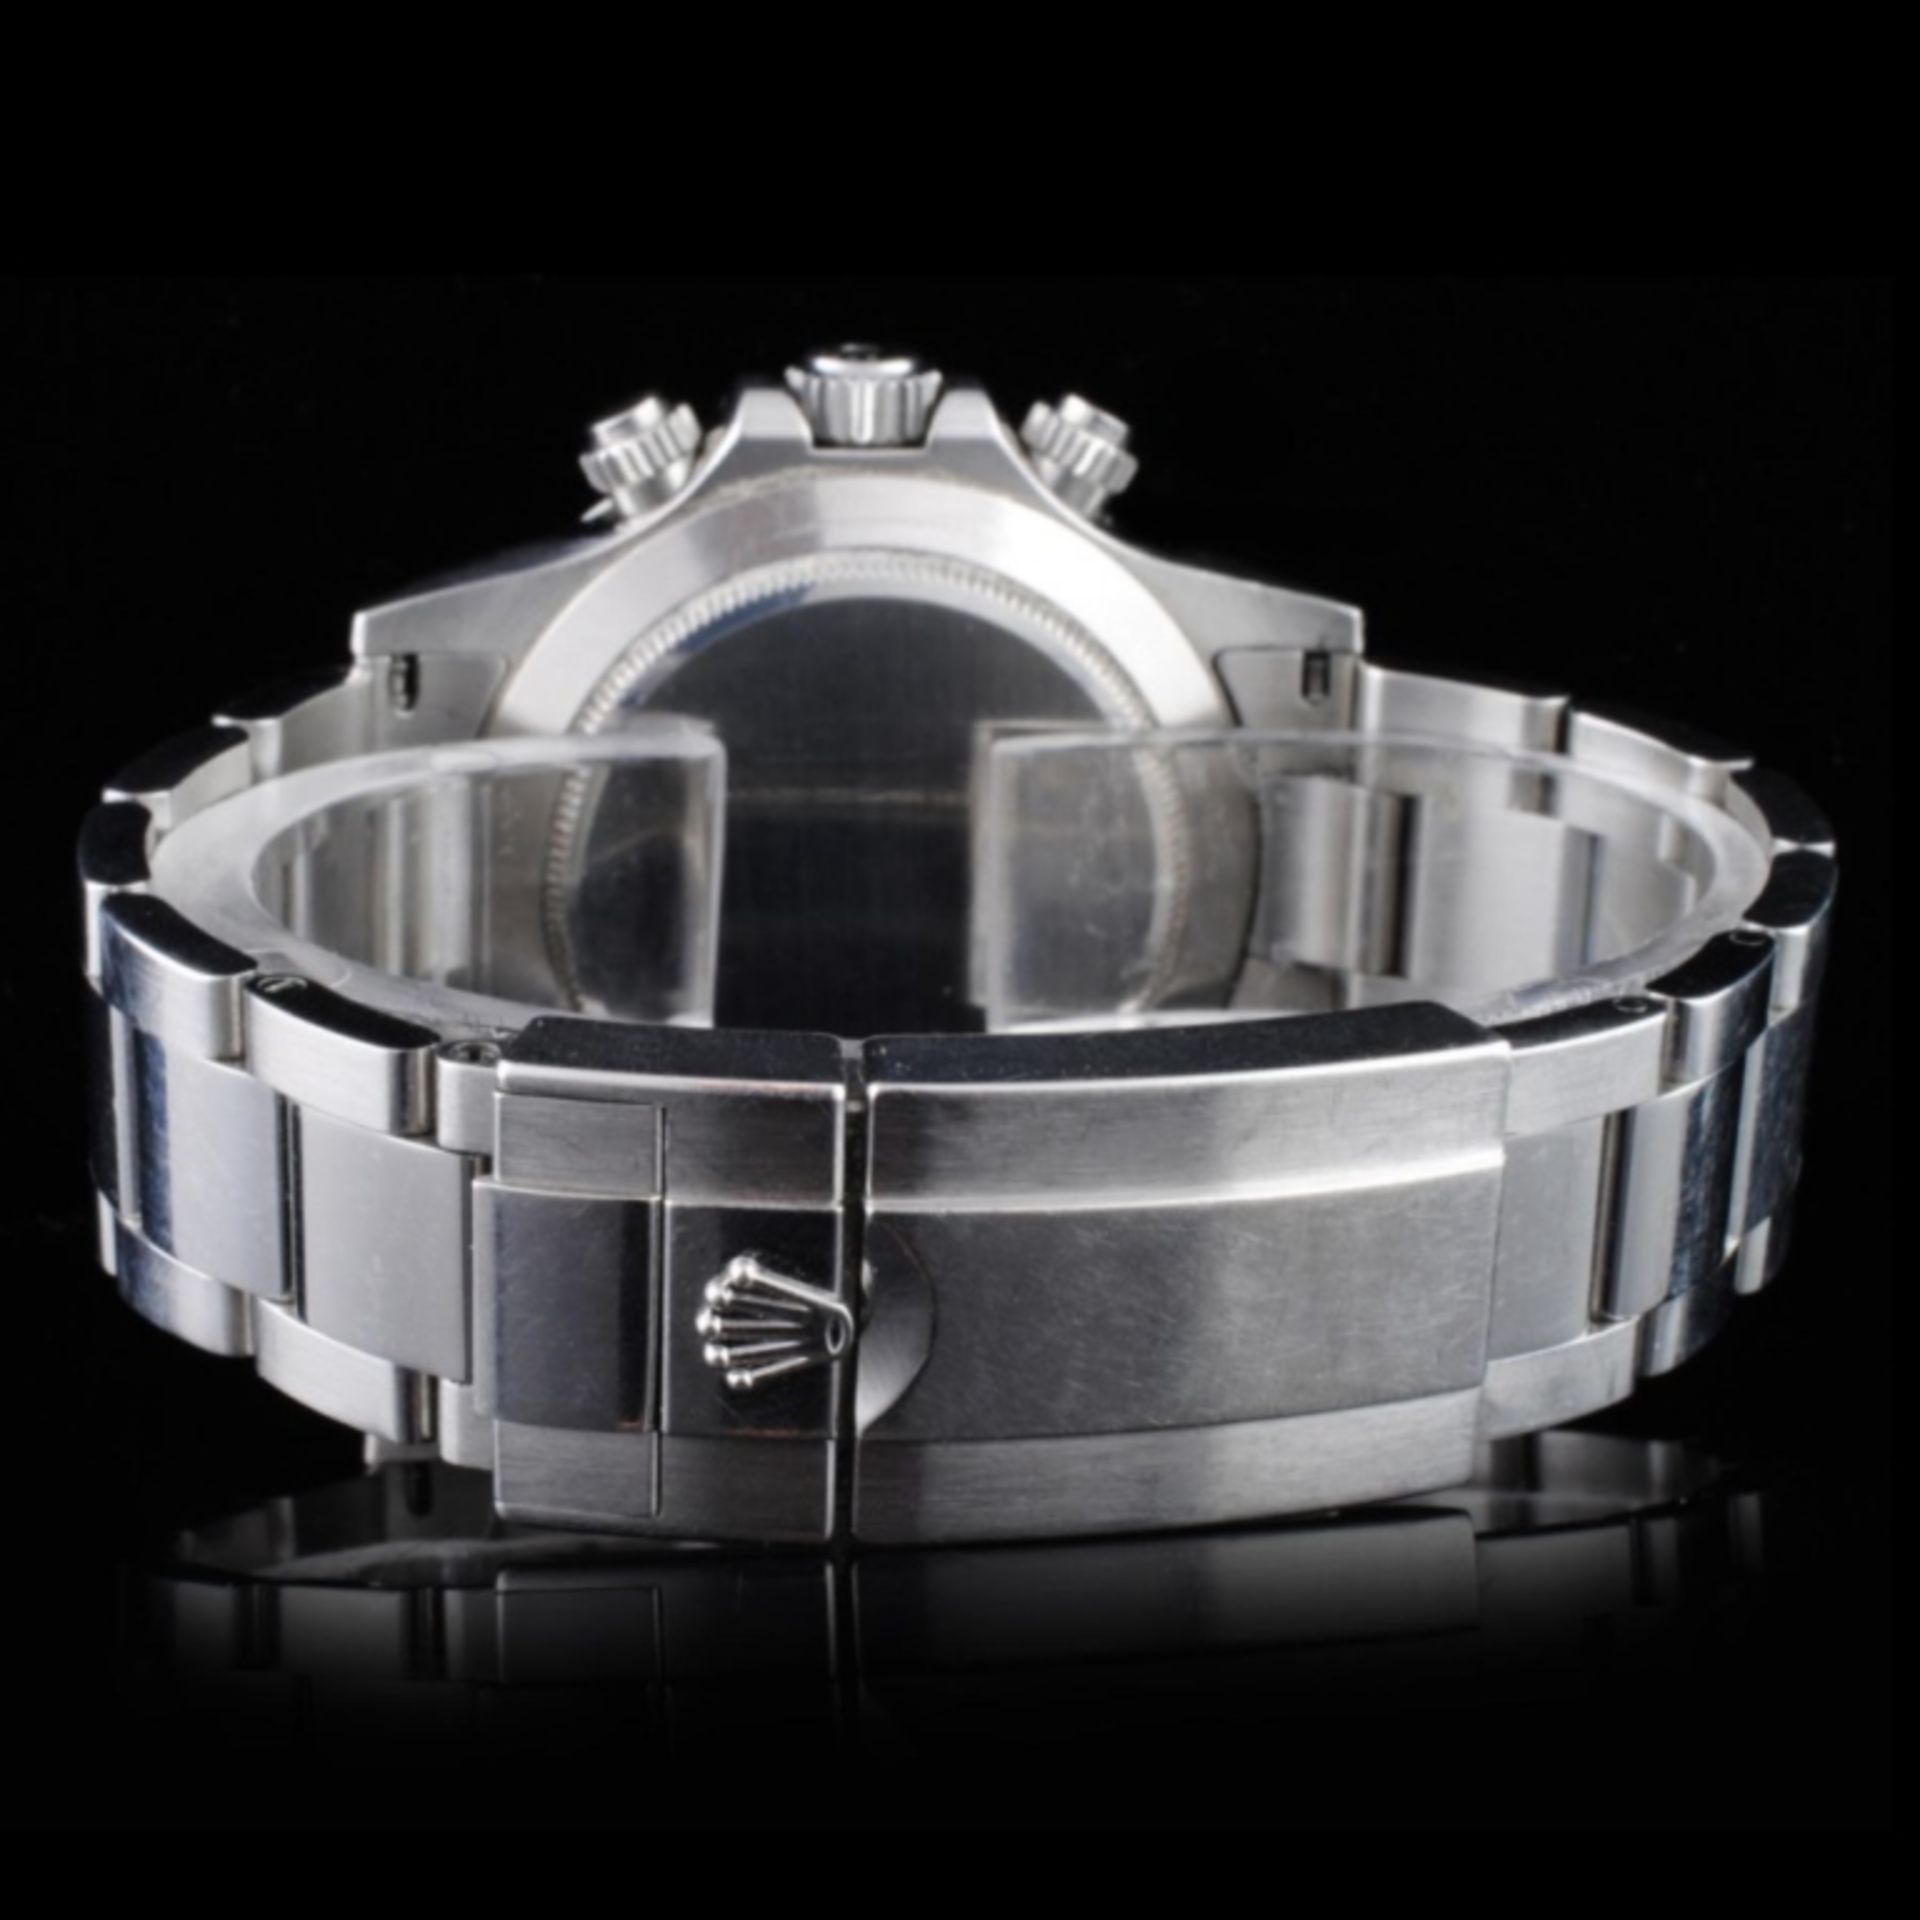 Rolex Daytona Stainless Steel Wristwatch - Image 3 of 5